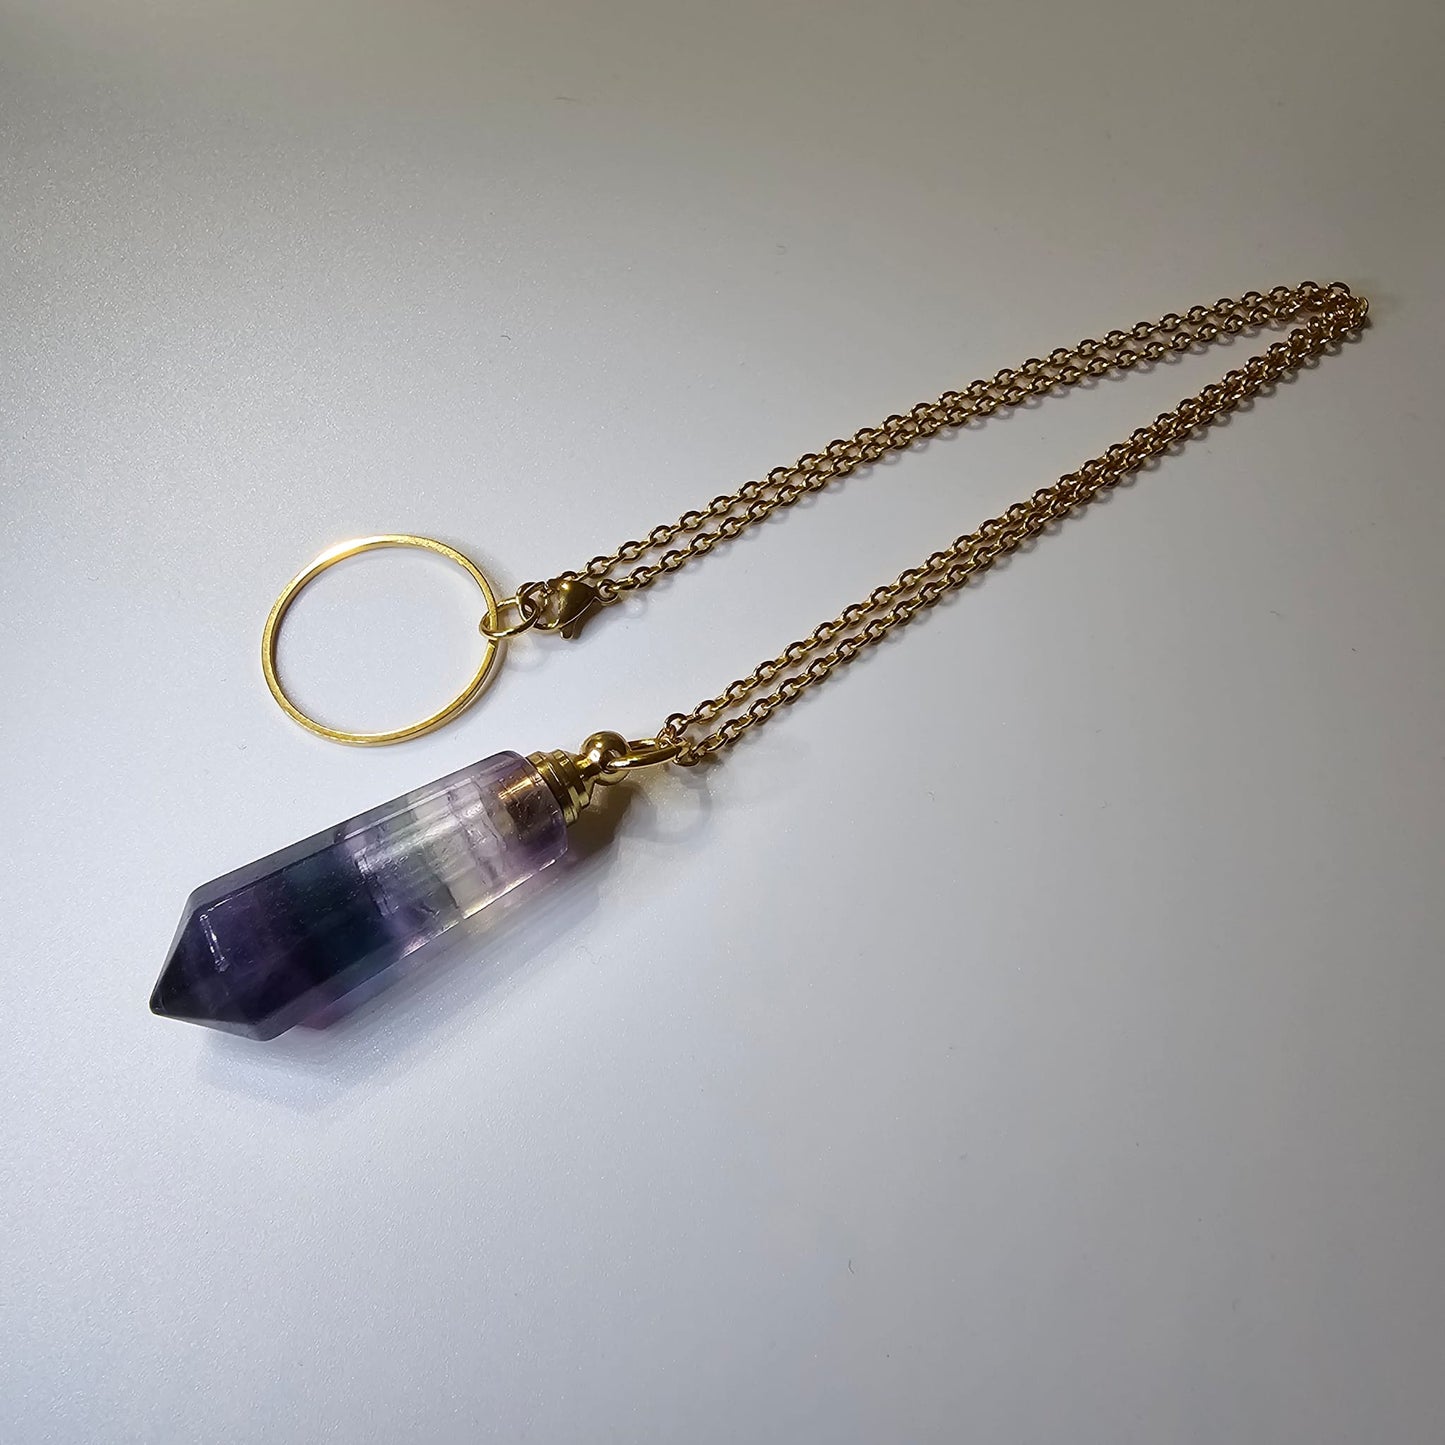 Genuine Fluorite Pendulum Pendant with Witness Chamber Reiki Dowsing Healing Necklace